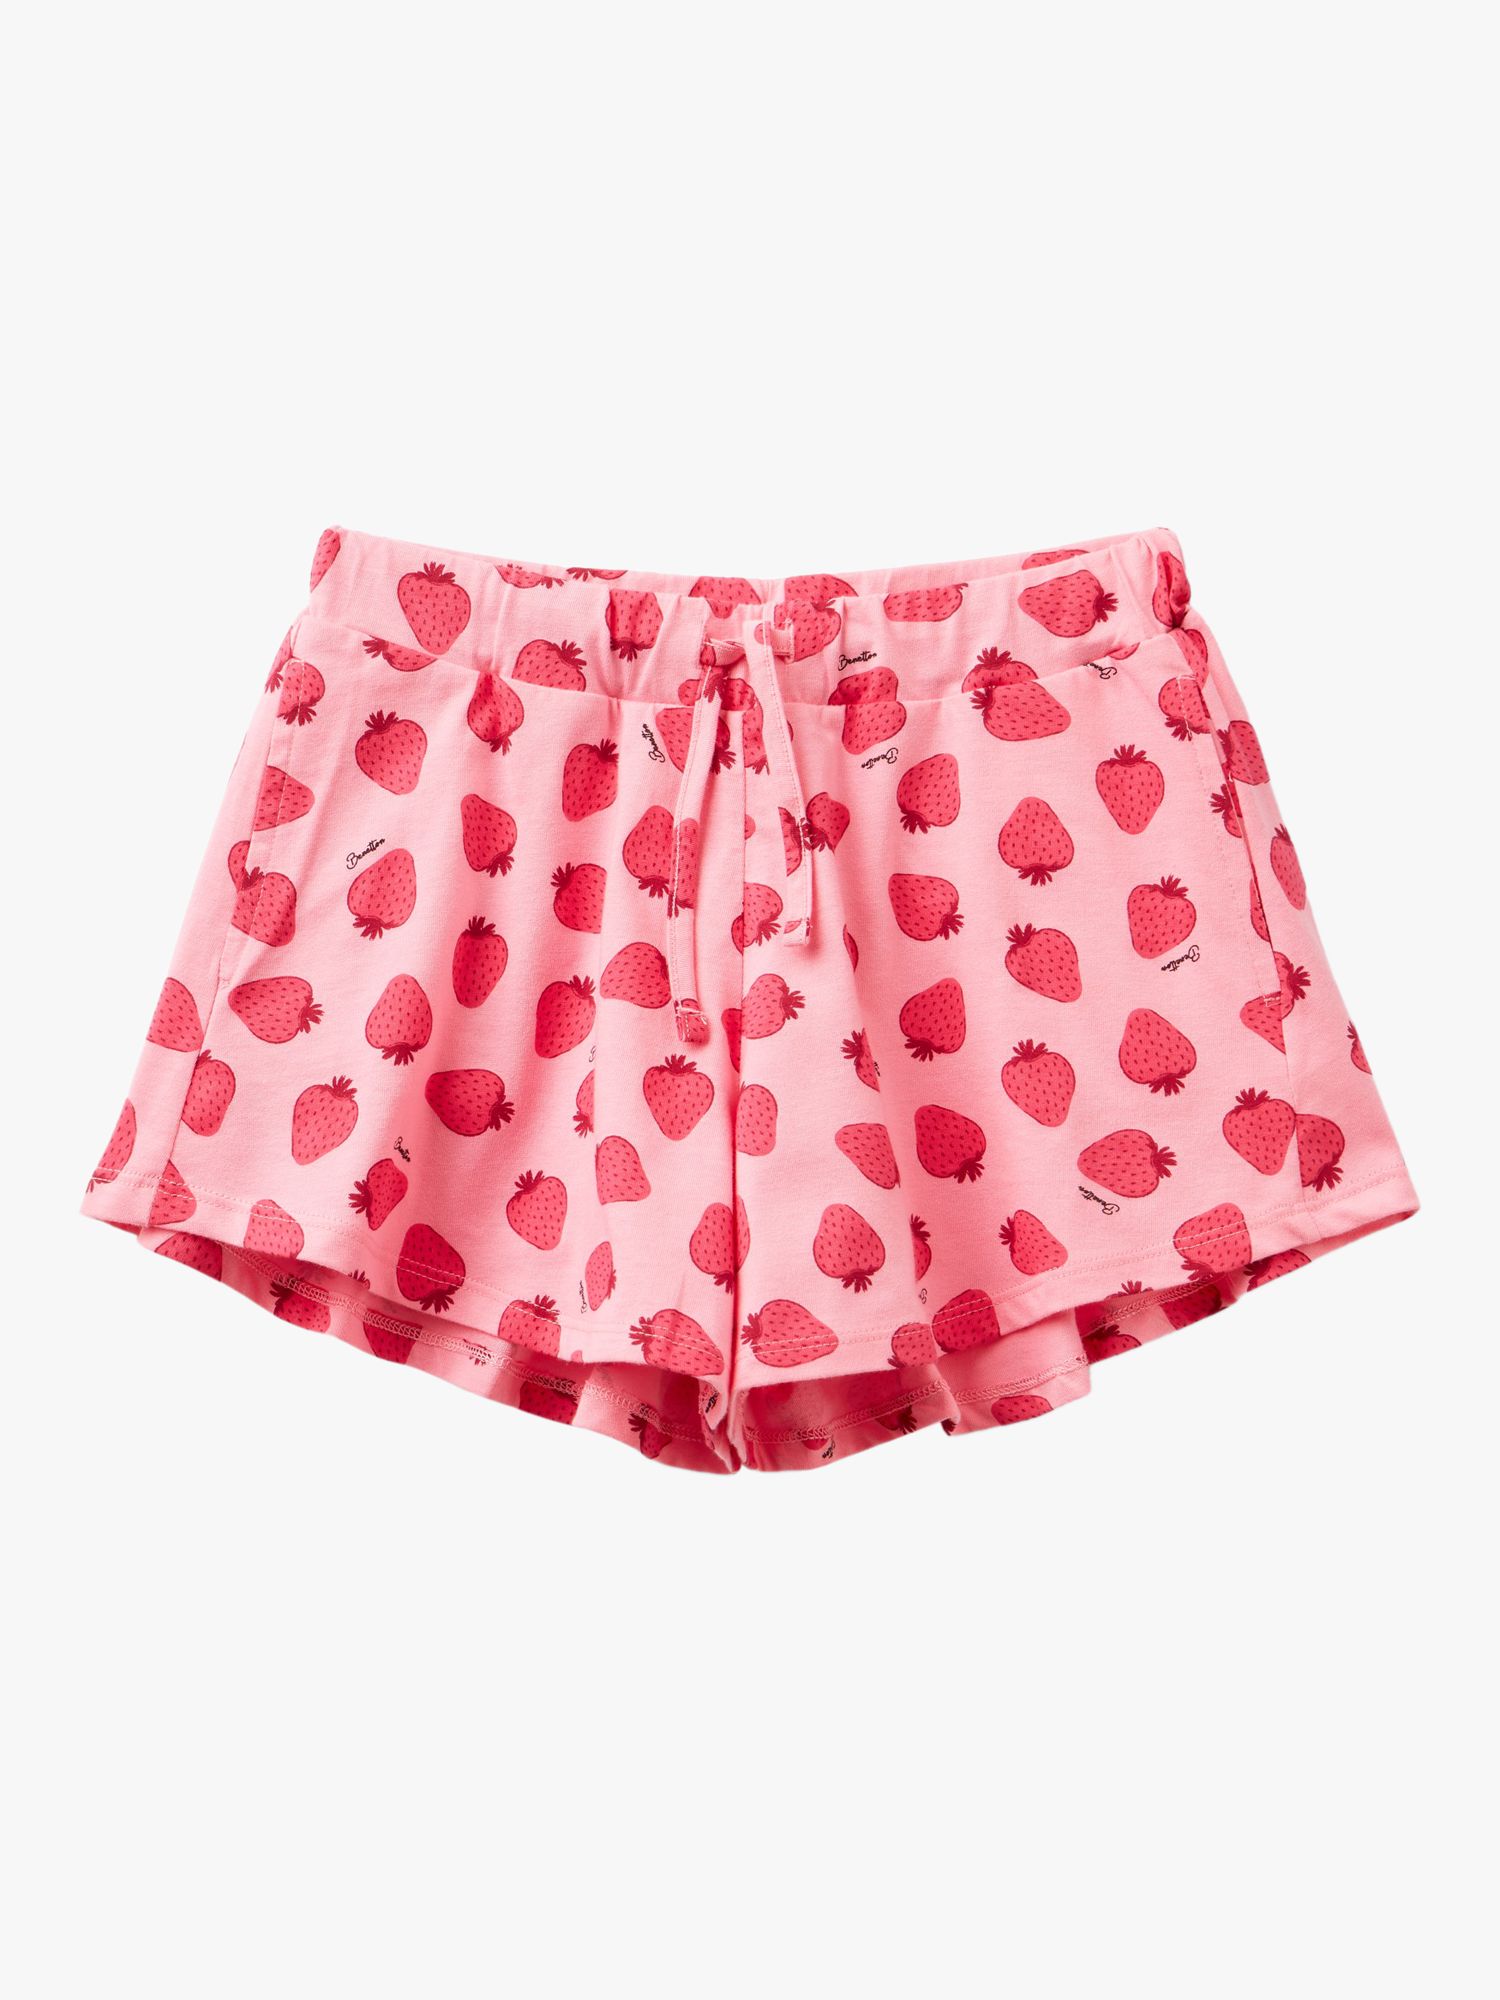 Benetton Kids' Strawberry Print Drawstring Shorts, Pink/Multi, 6-7 years